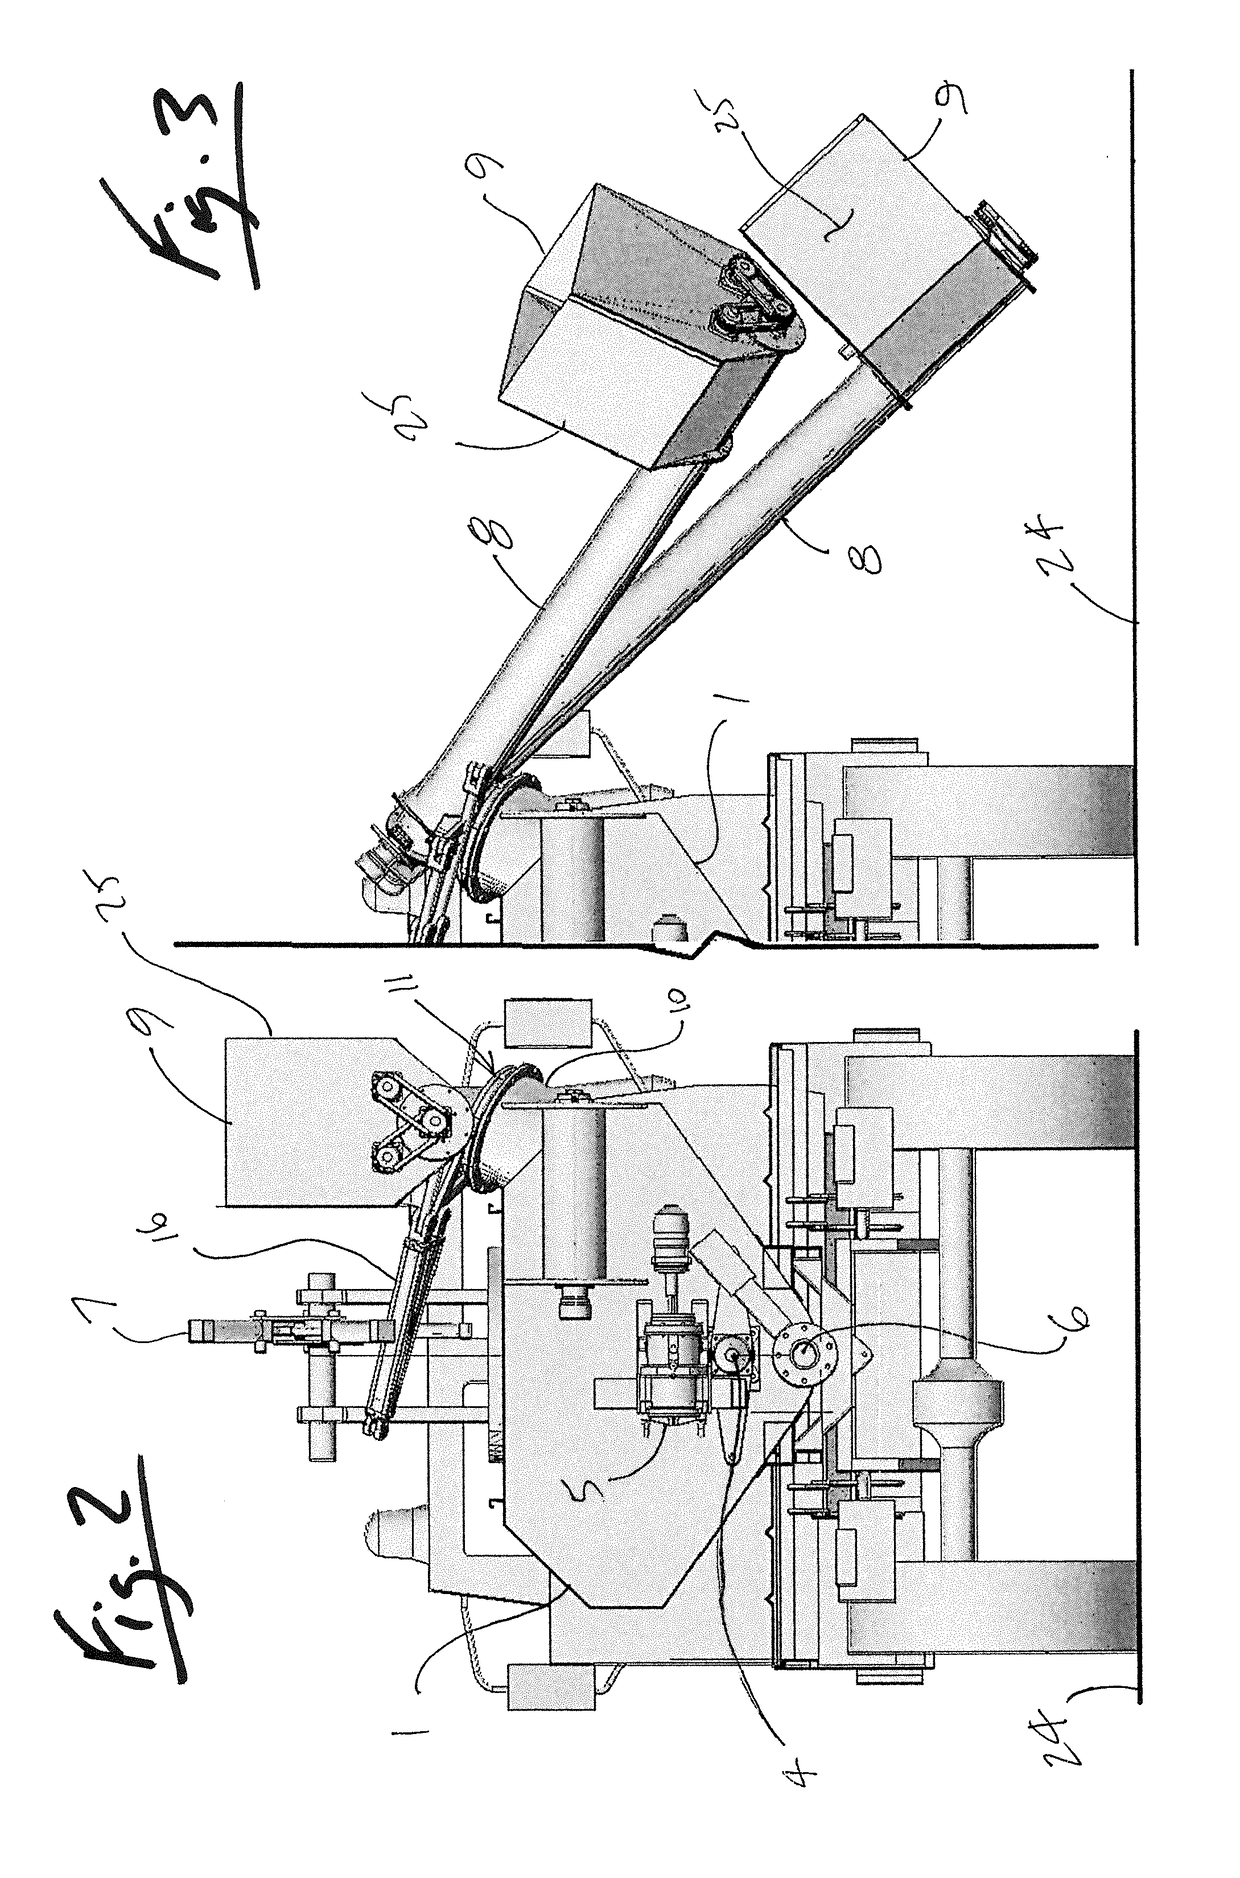 Hydroseeder with pivoting auger conveyor